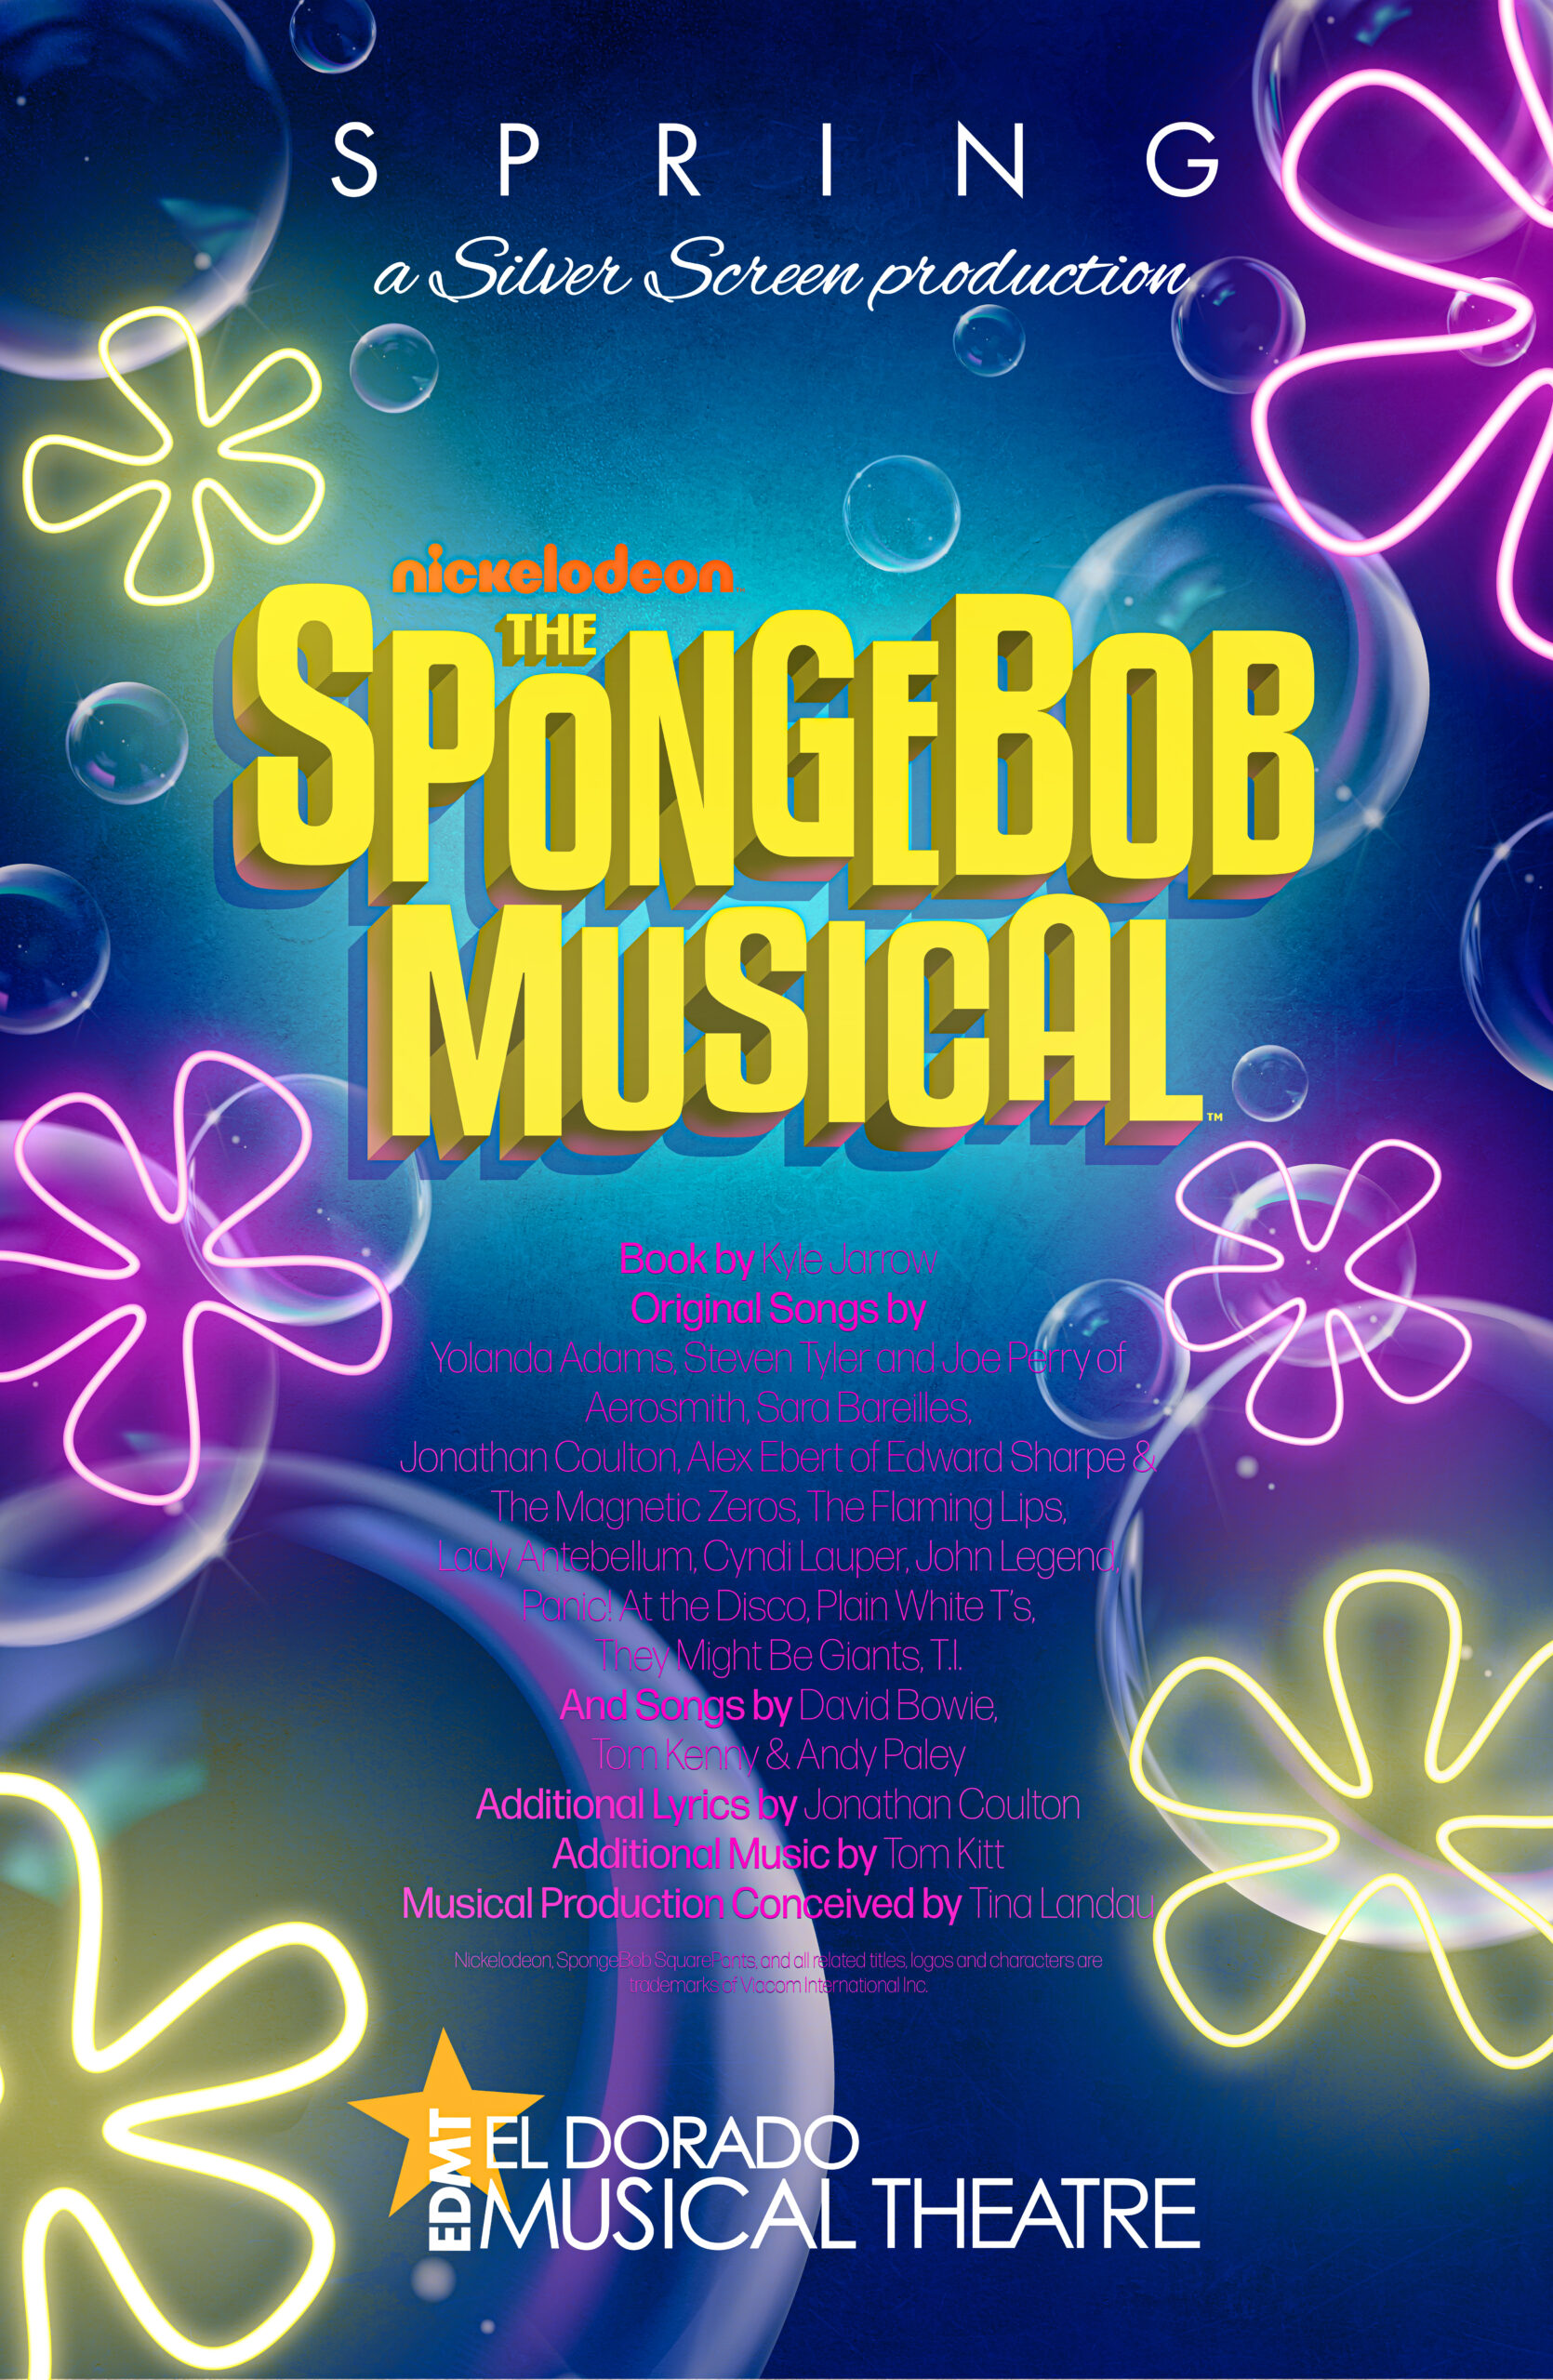 Nickelodeon the SpongeBob Musical production of El Dorado Musical Theatre